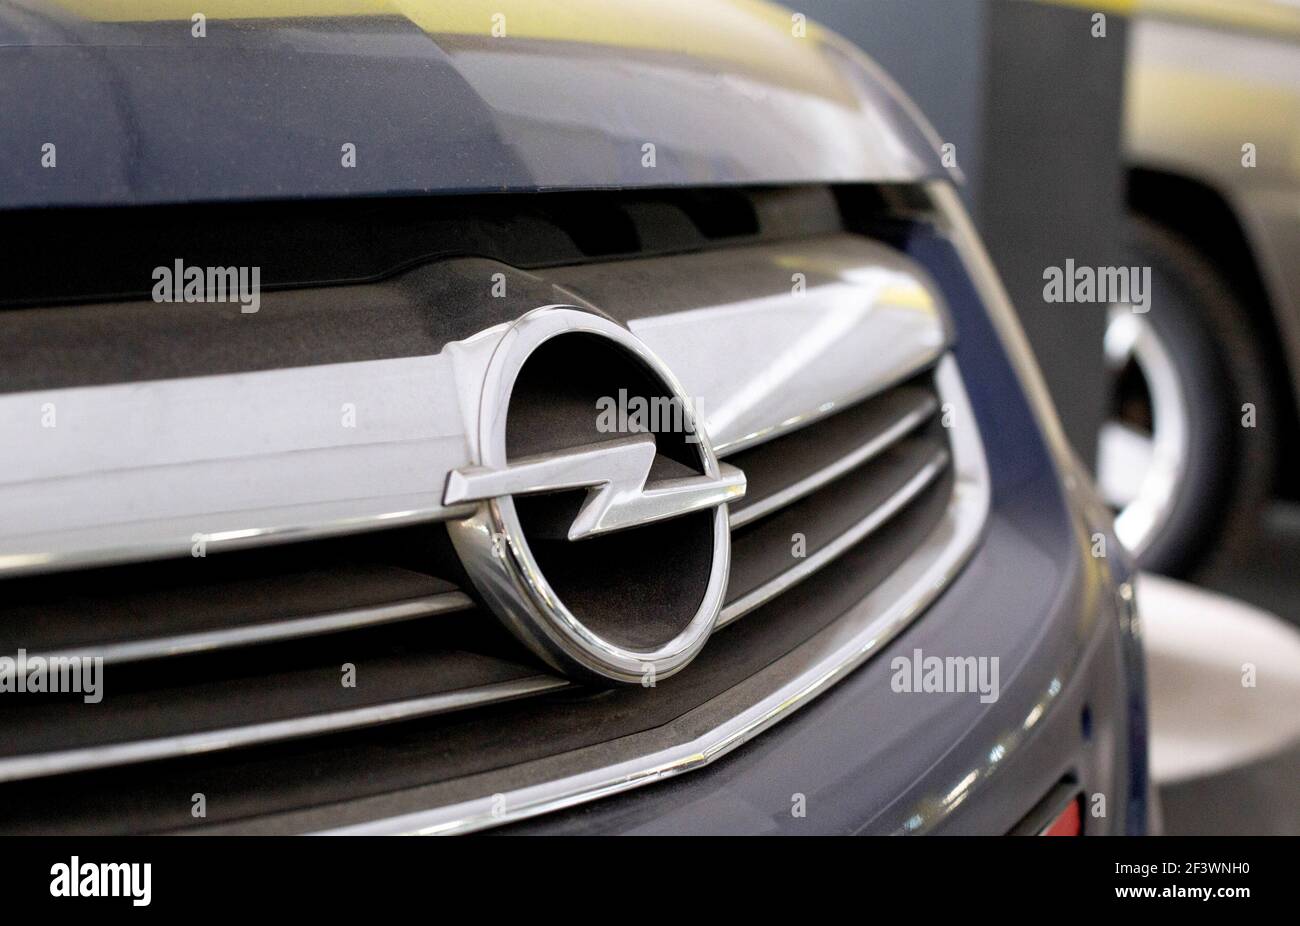 MINSK, BELARUS 07.10.19: Opel car emblem on the car hood. Concept